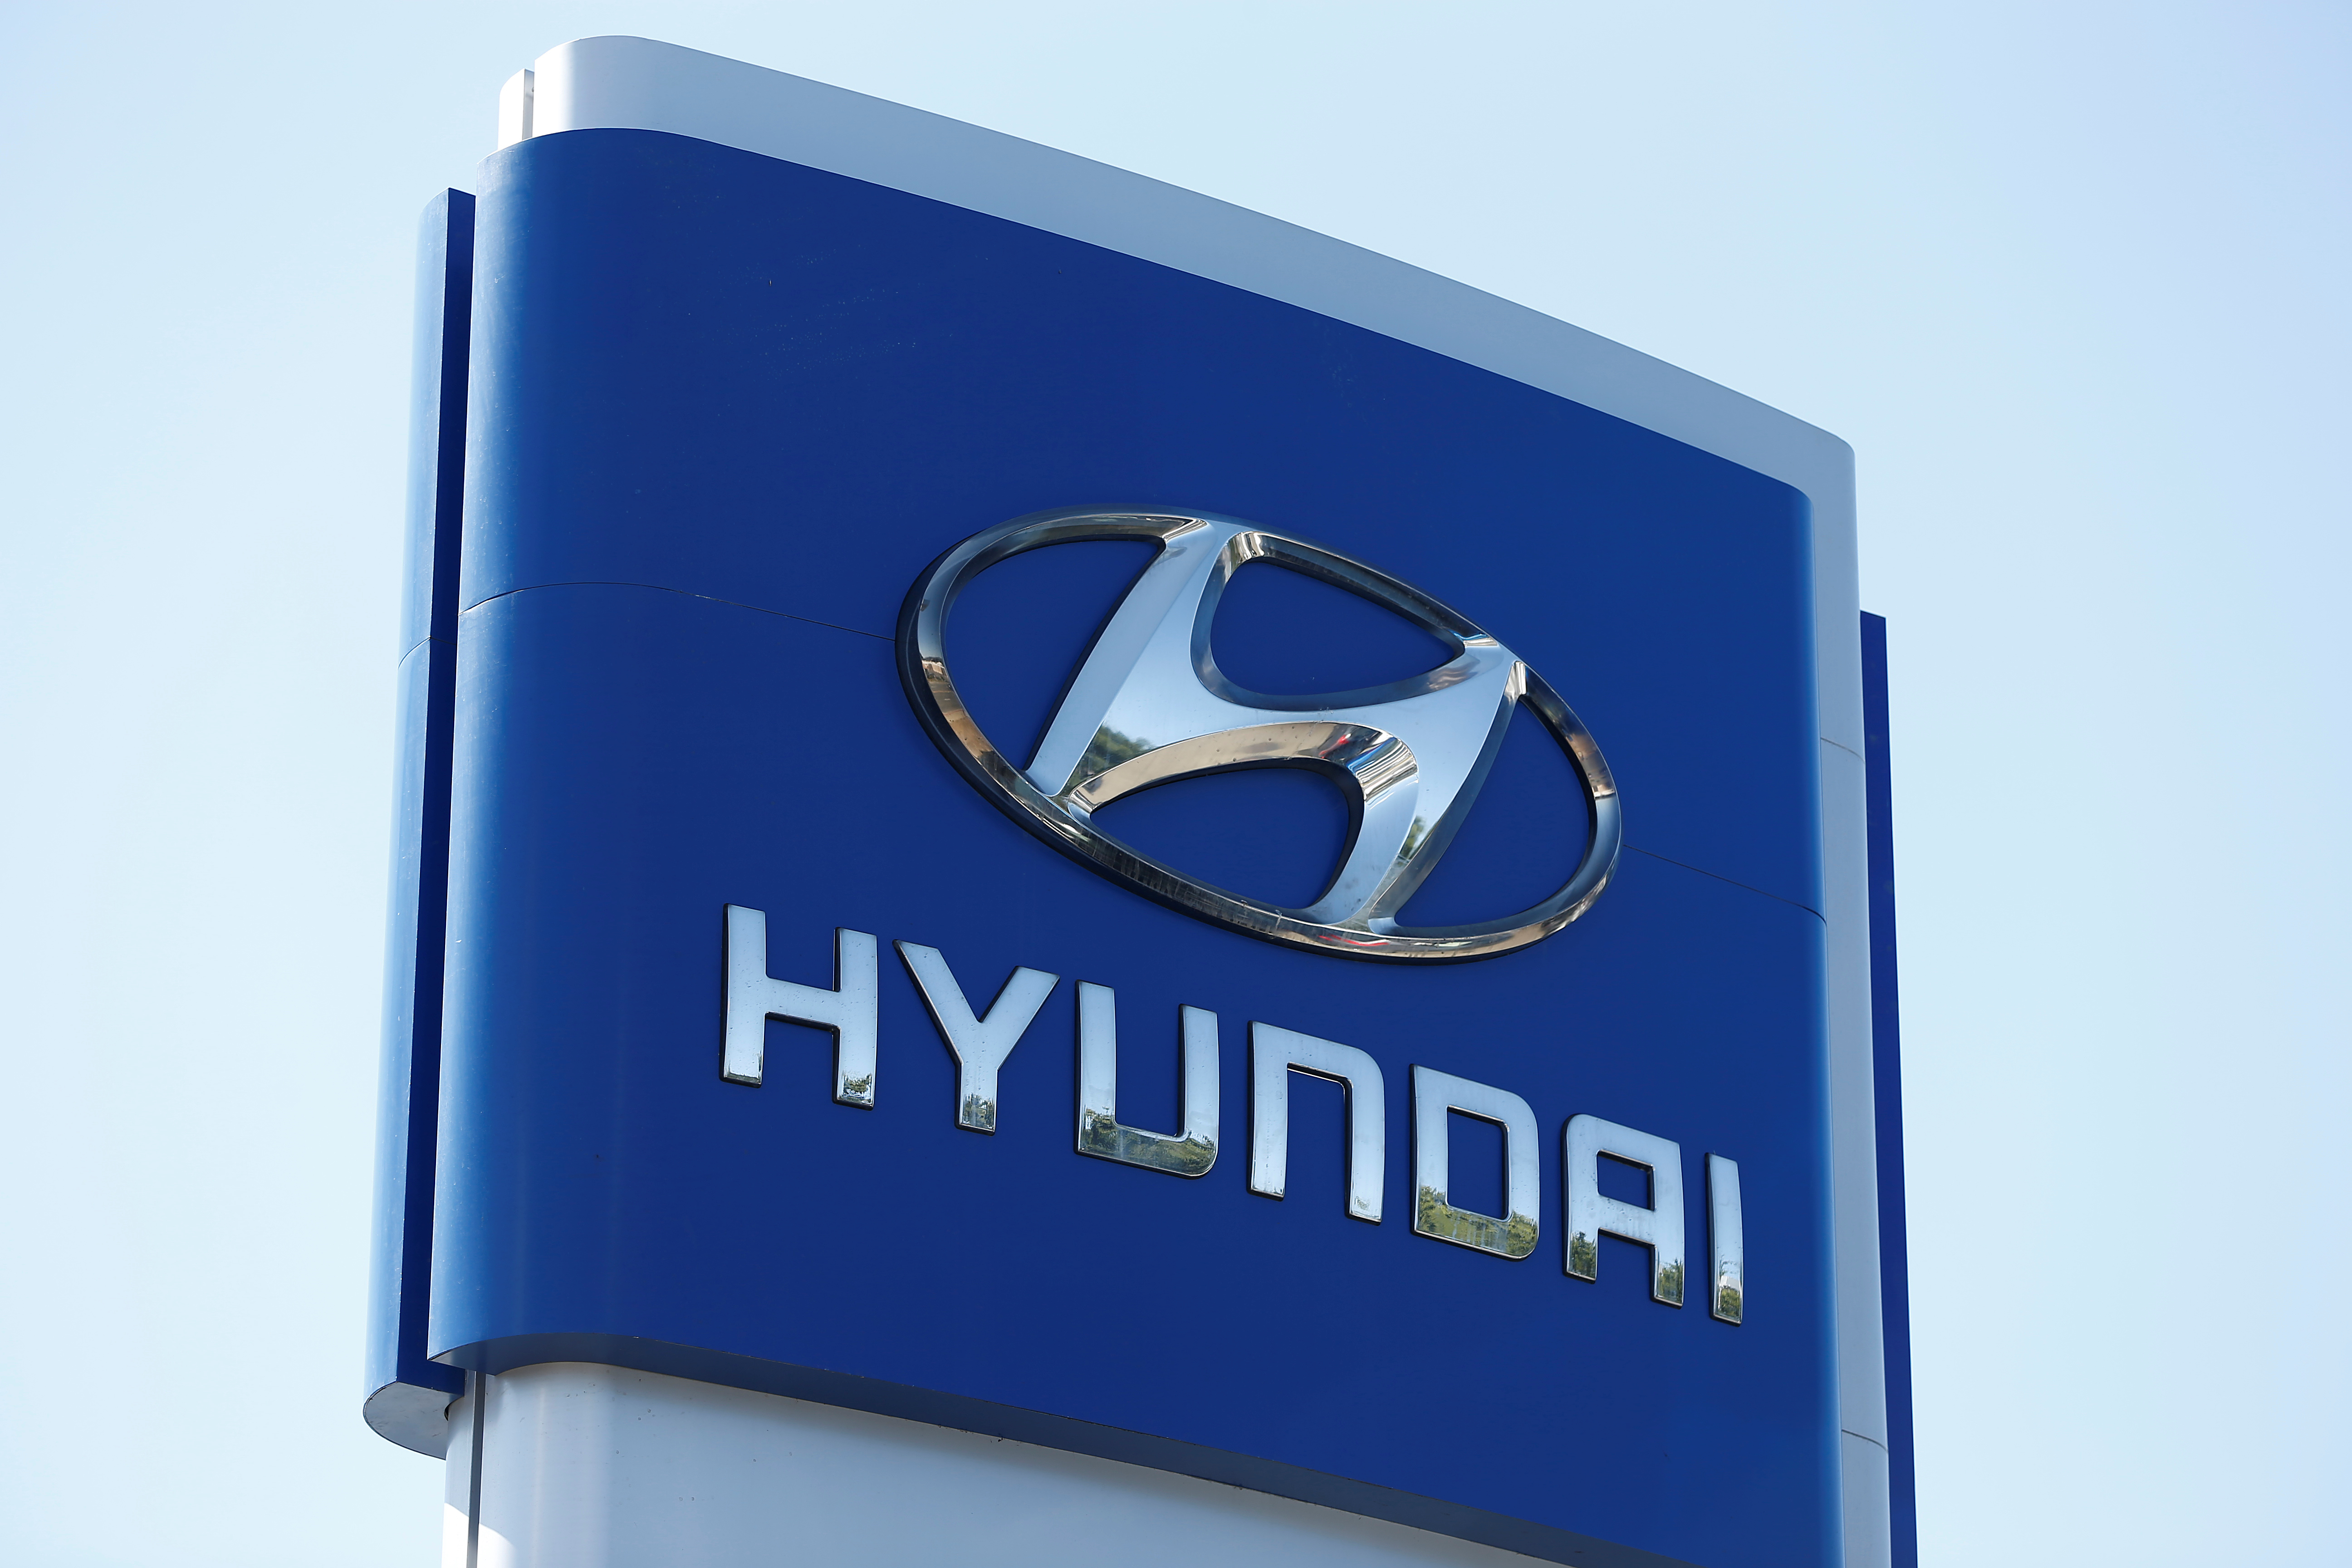 A Hyundai logo is seen at Hyundai of Serramonte in Colma, California